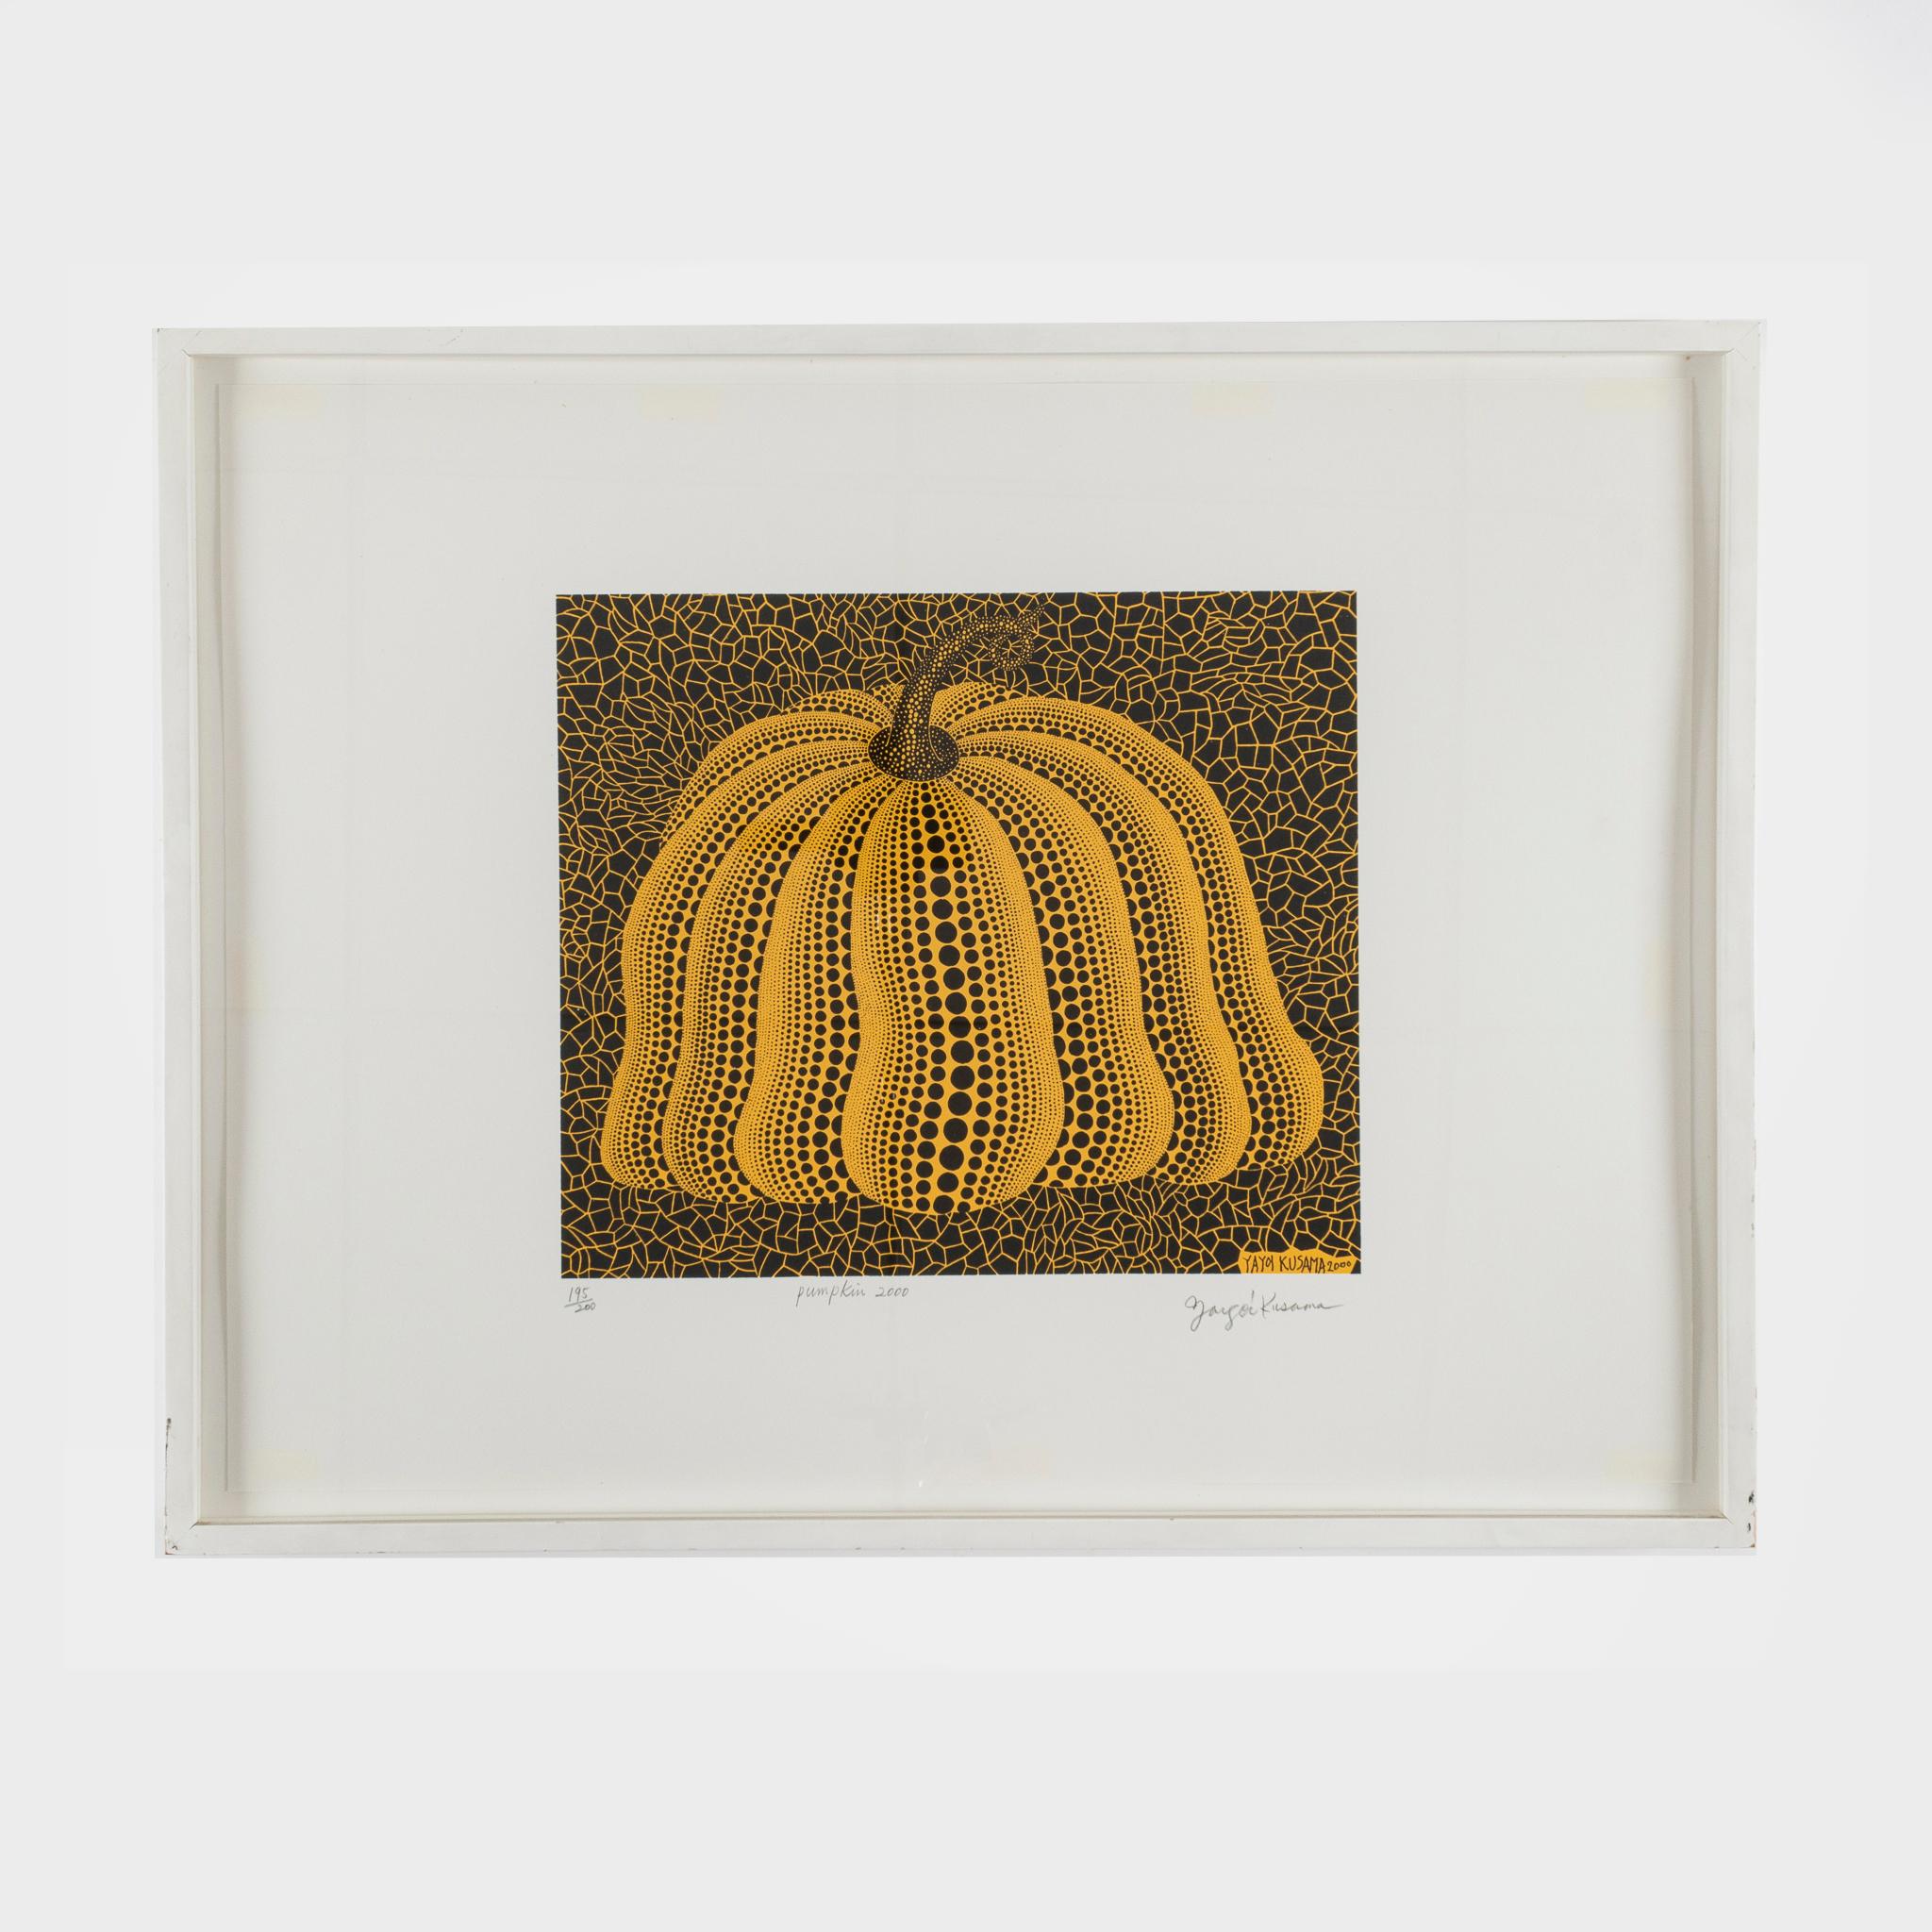 Yayoi Kusama Abstract Print - Pumpkin 2000 (Yellow)